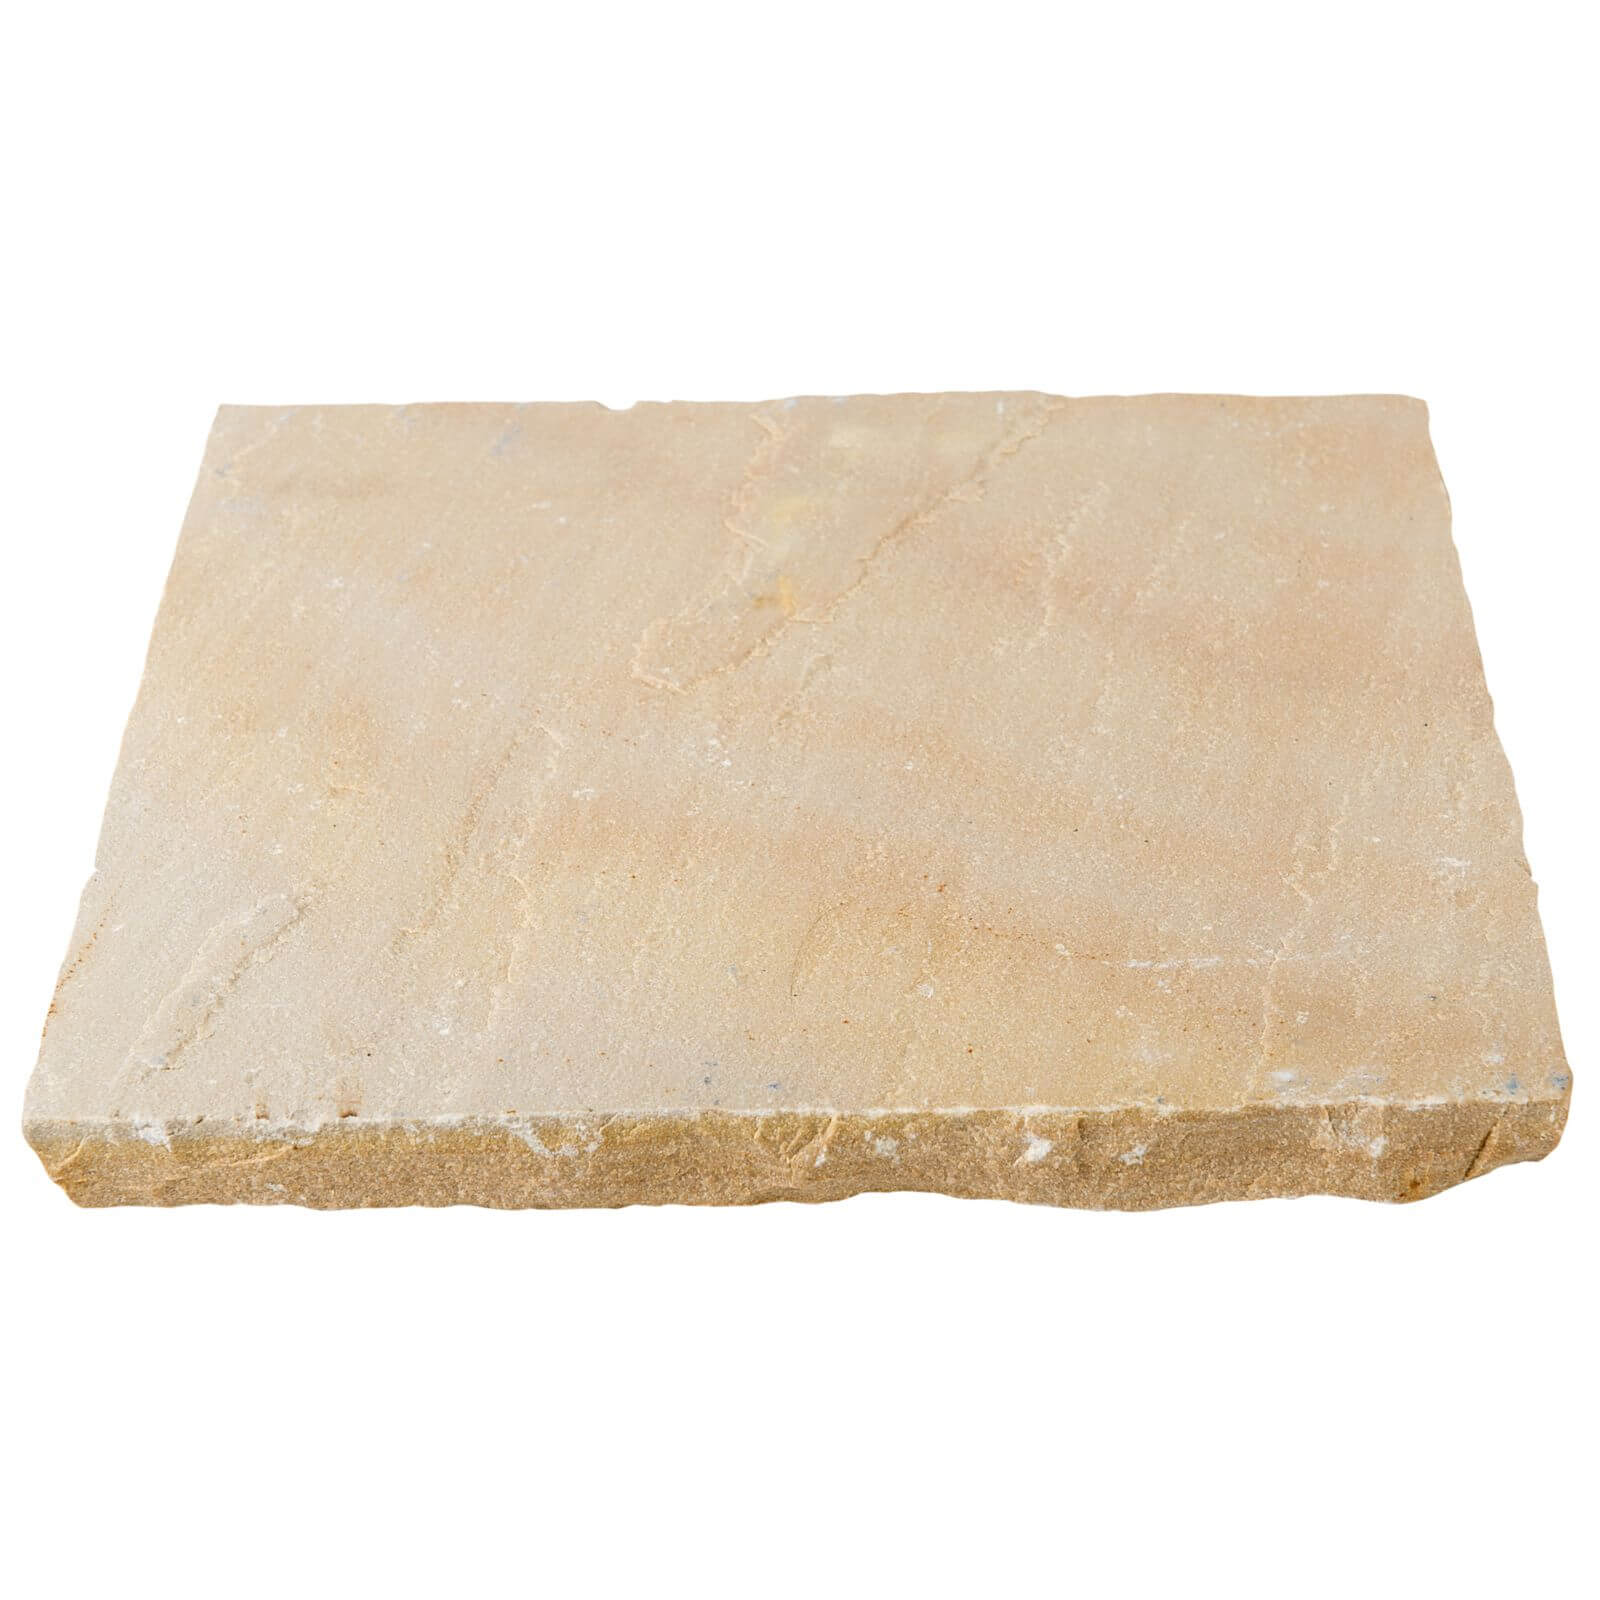 Stylish Stone Natural Sandstone 600 x 600mm - Scottish Glen